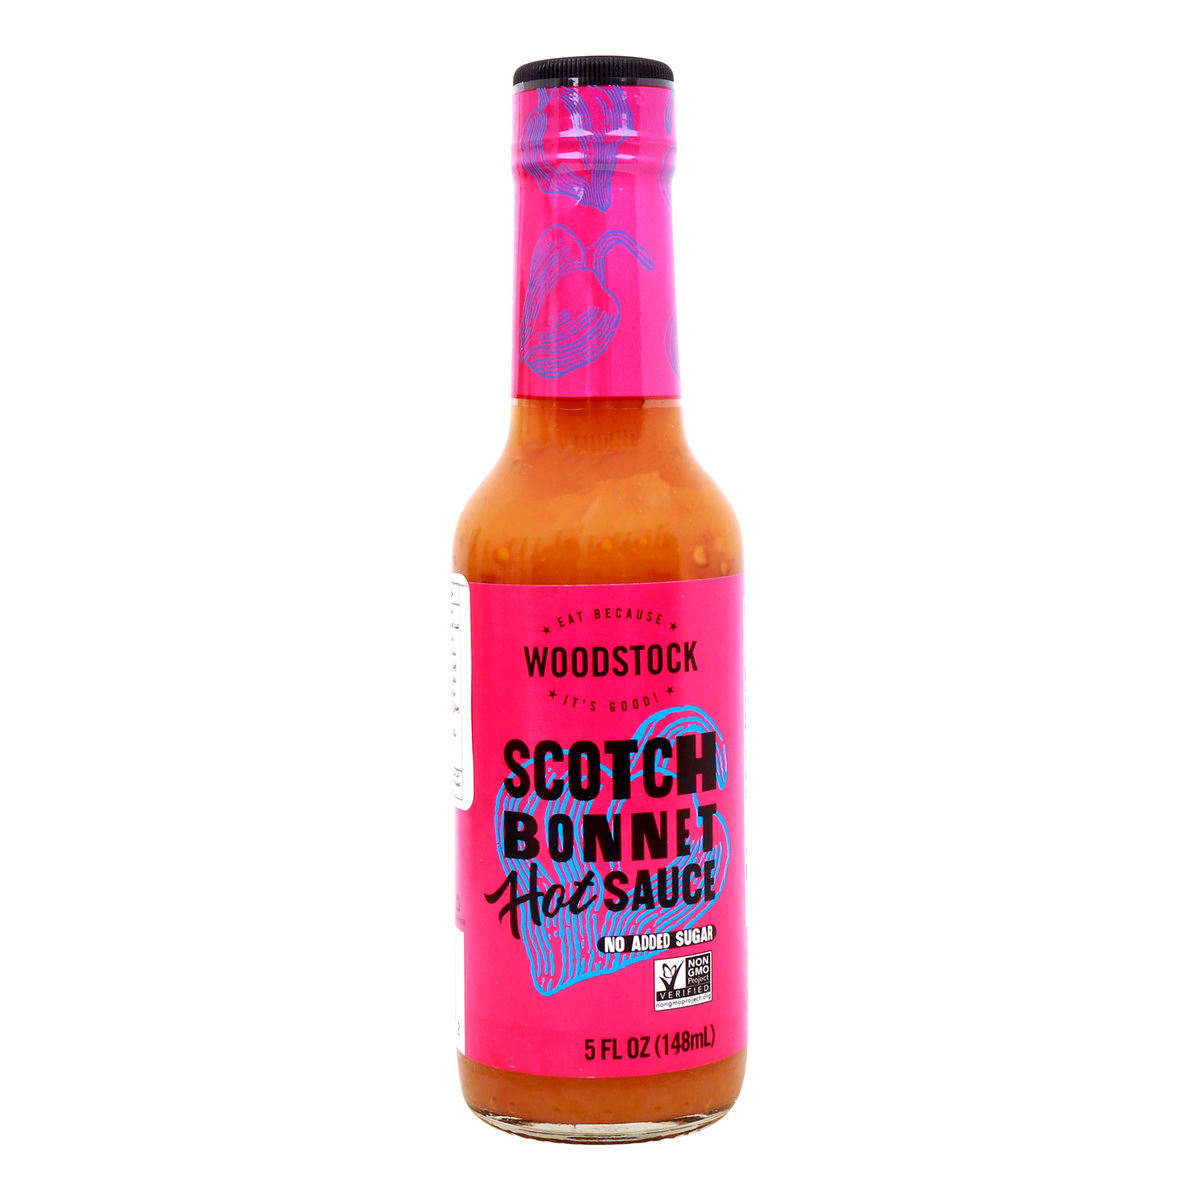 Woodstock Scotch Bonnet Hot Sauce, 5 OZ (148 ml)